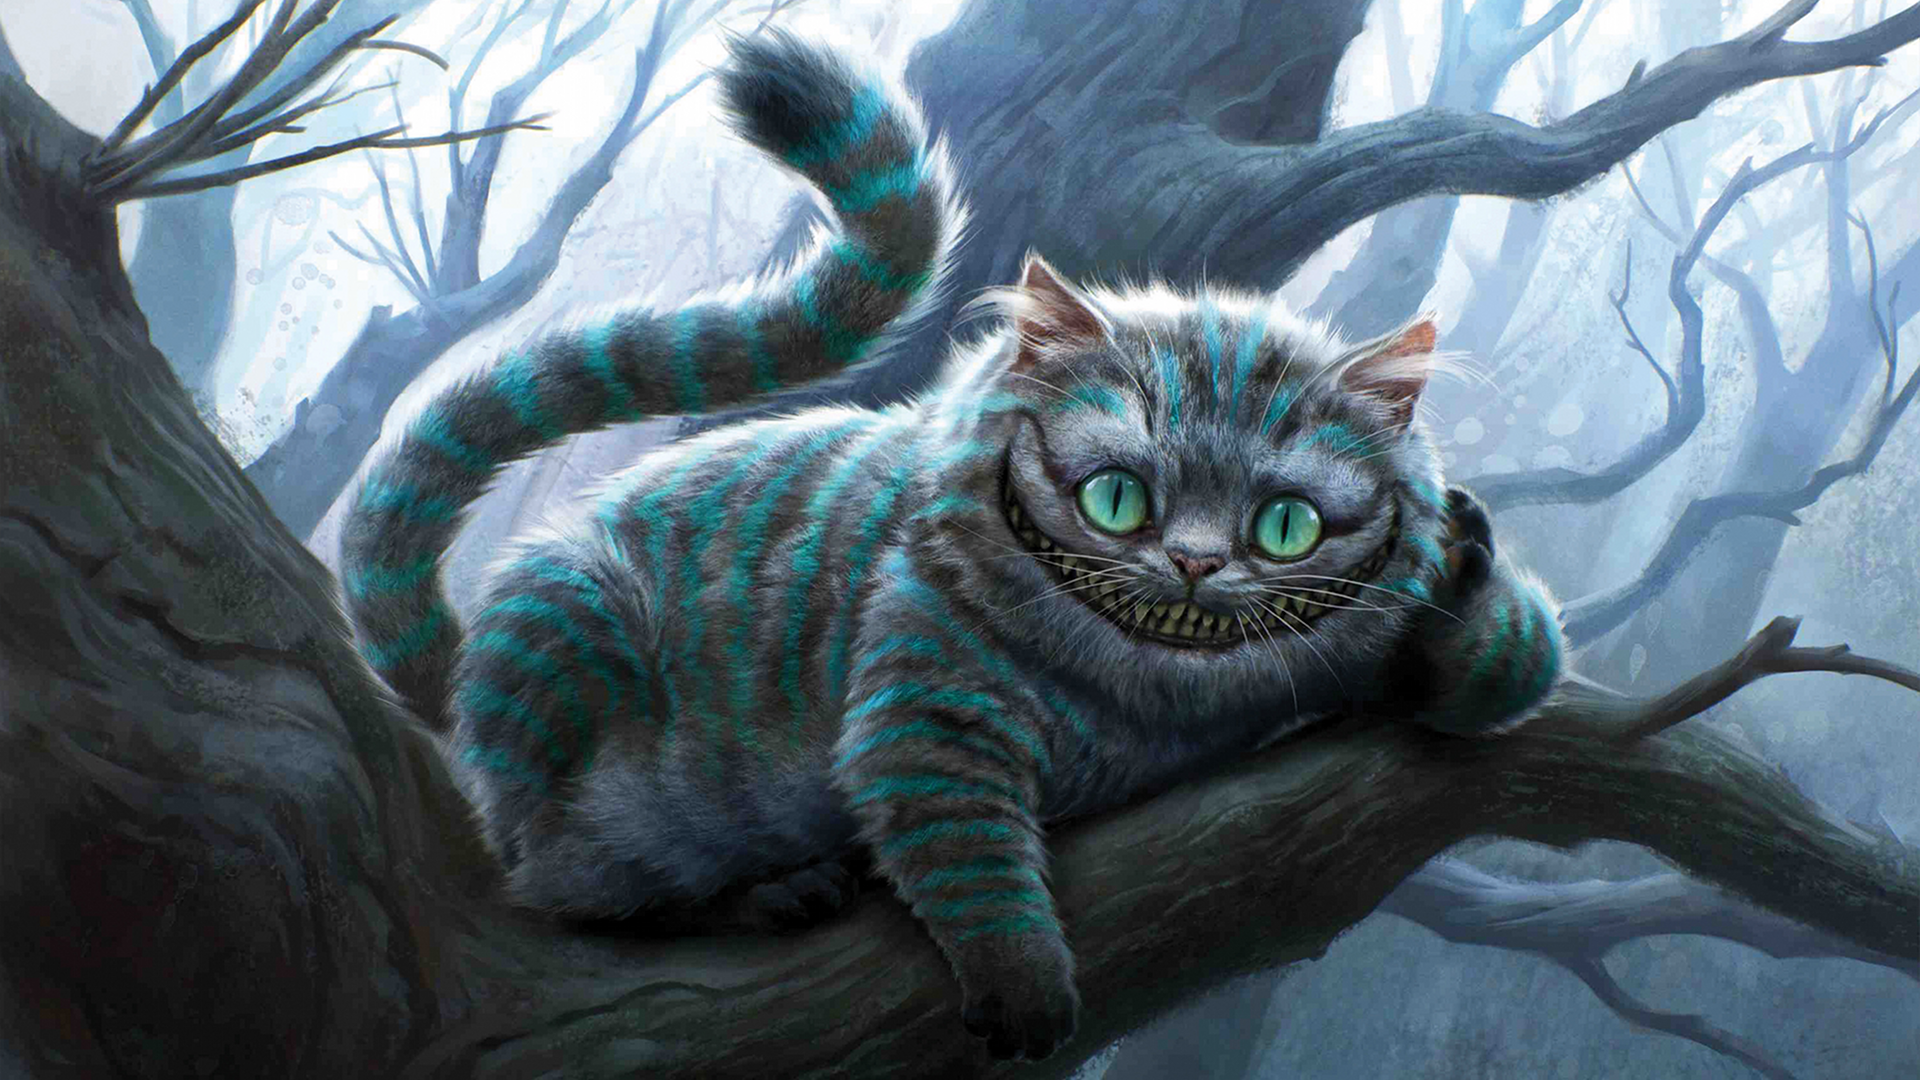 General 1920x1080 Alice in Wonderland Cheshire Cat digital art cats trees smiling cyan